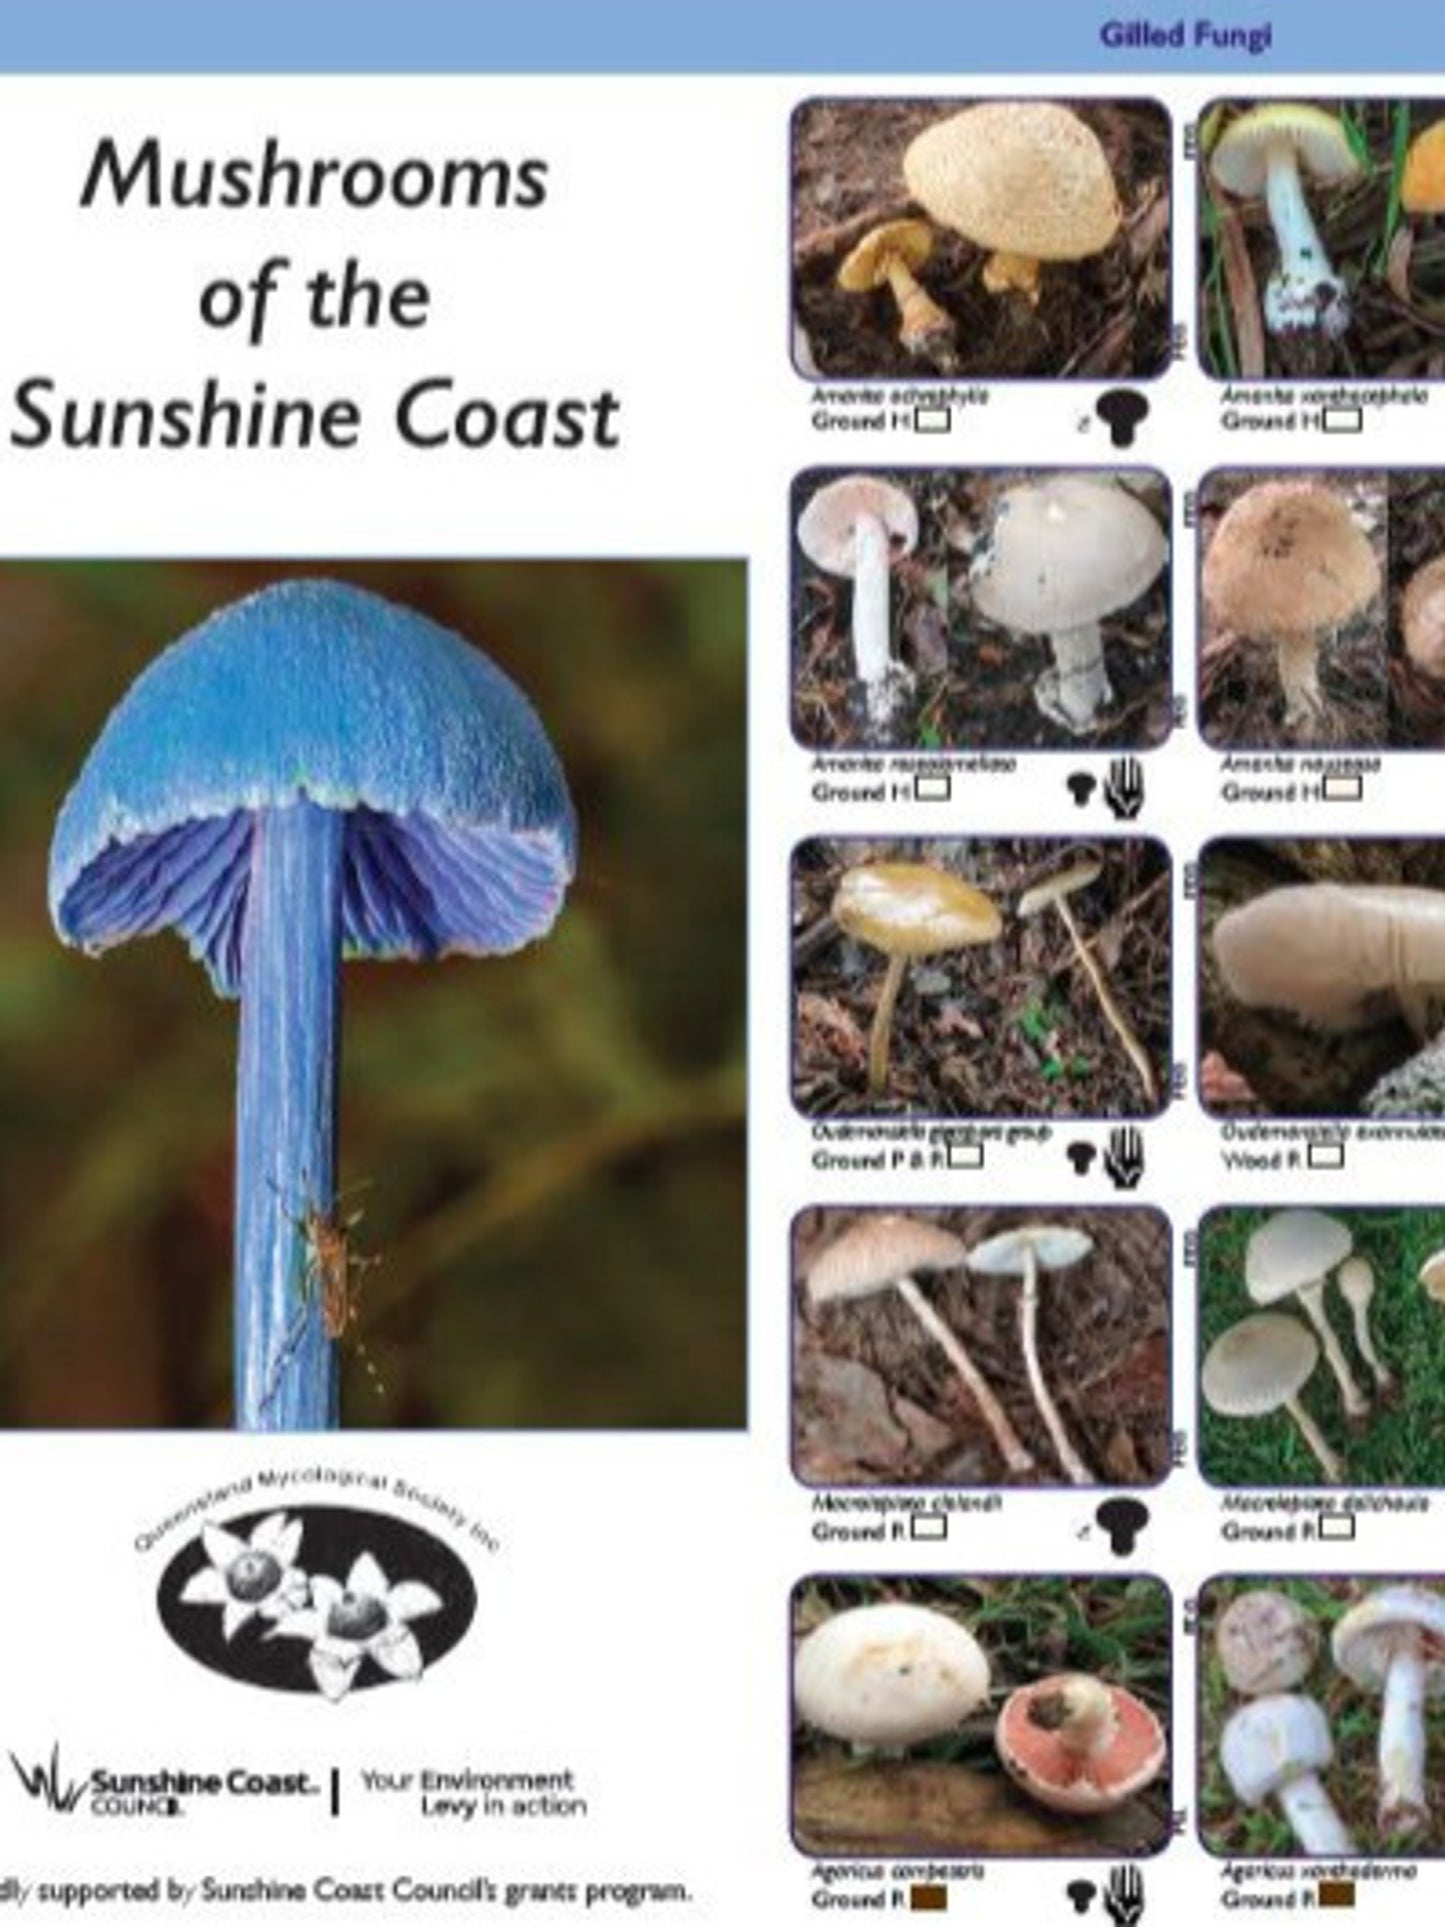 Pair of Guides: Mushrooms and Fungi of the Sunshine Coast